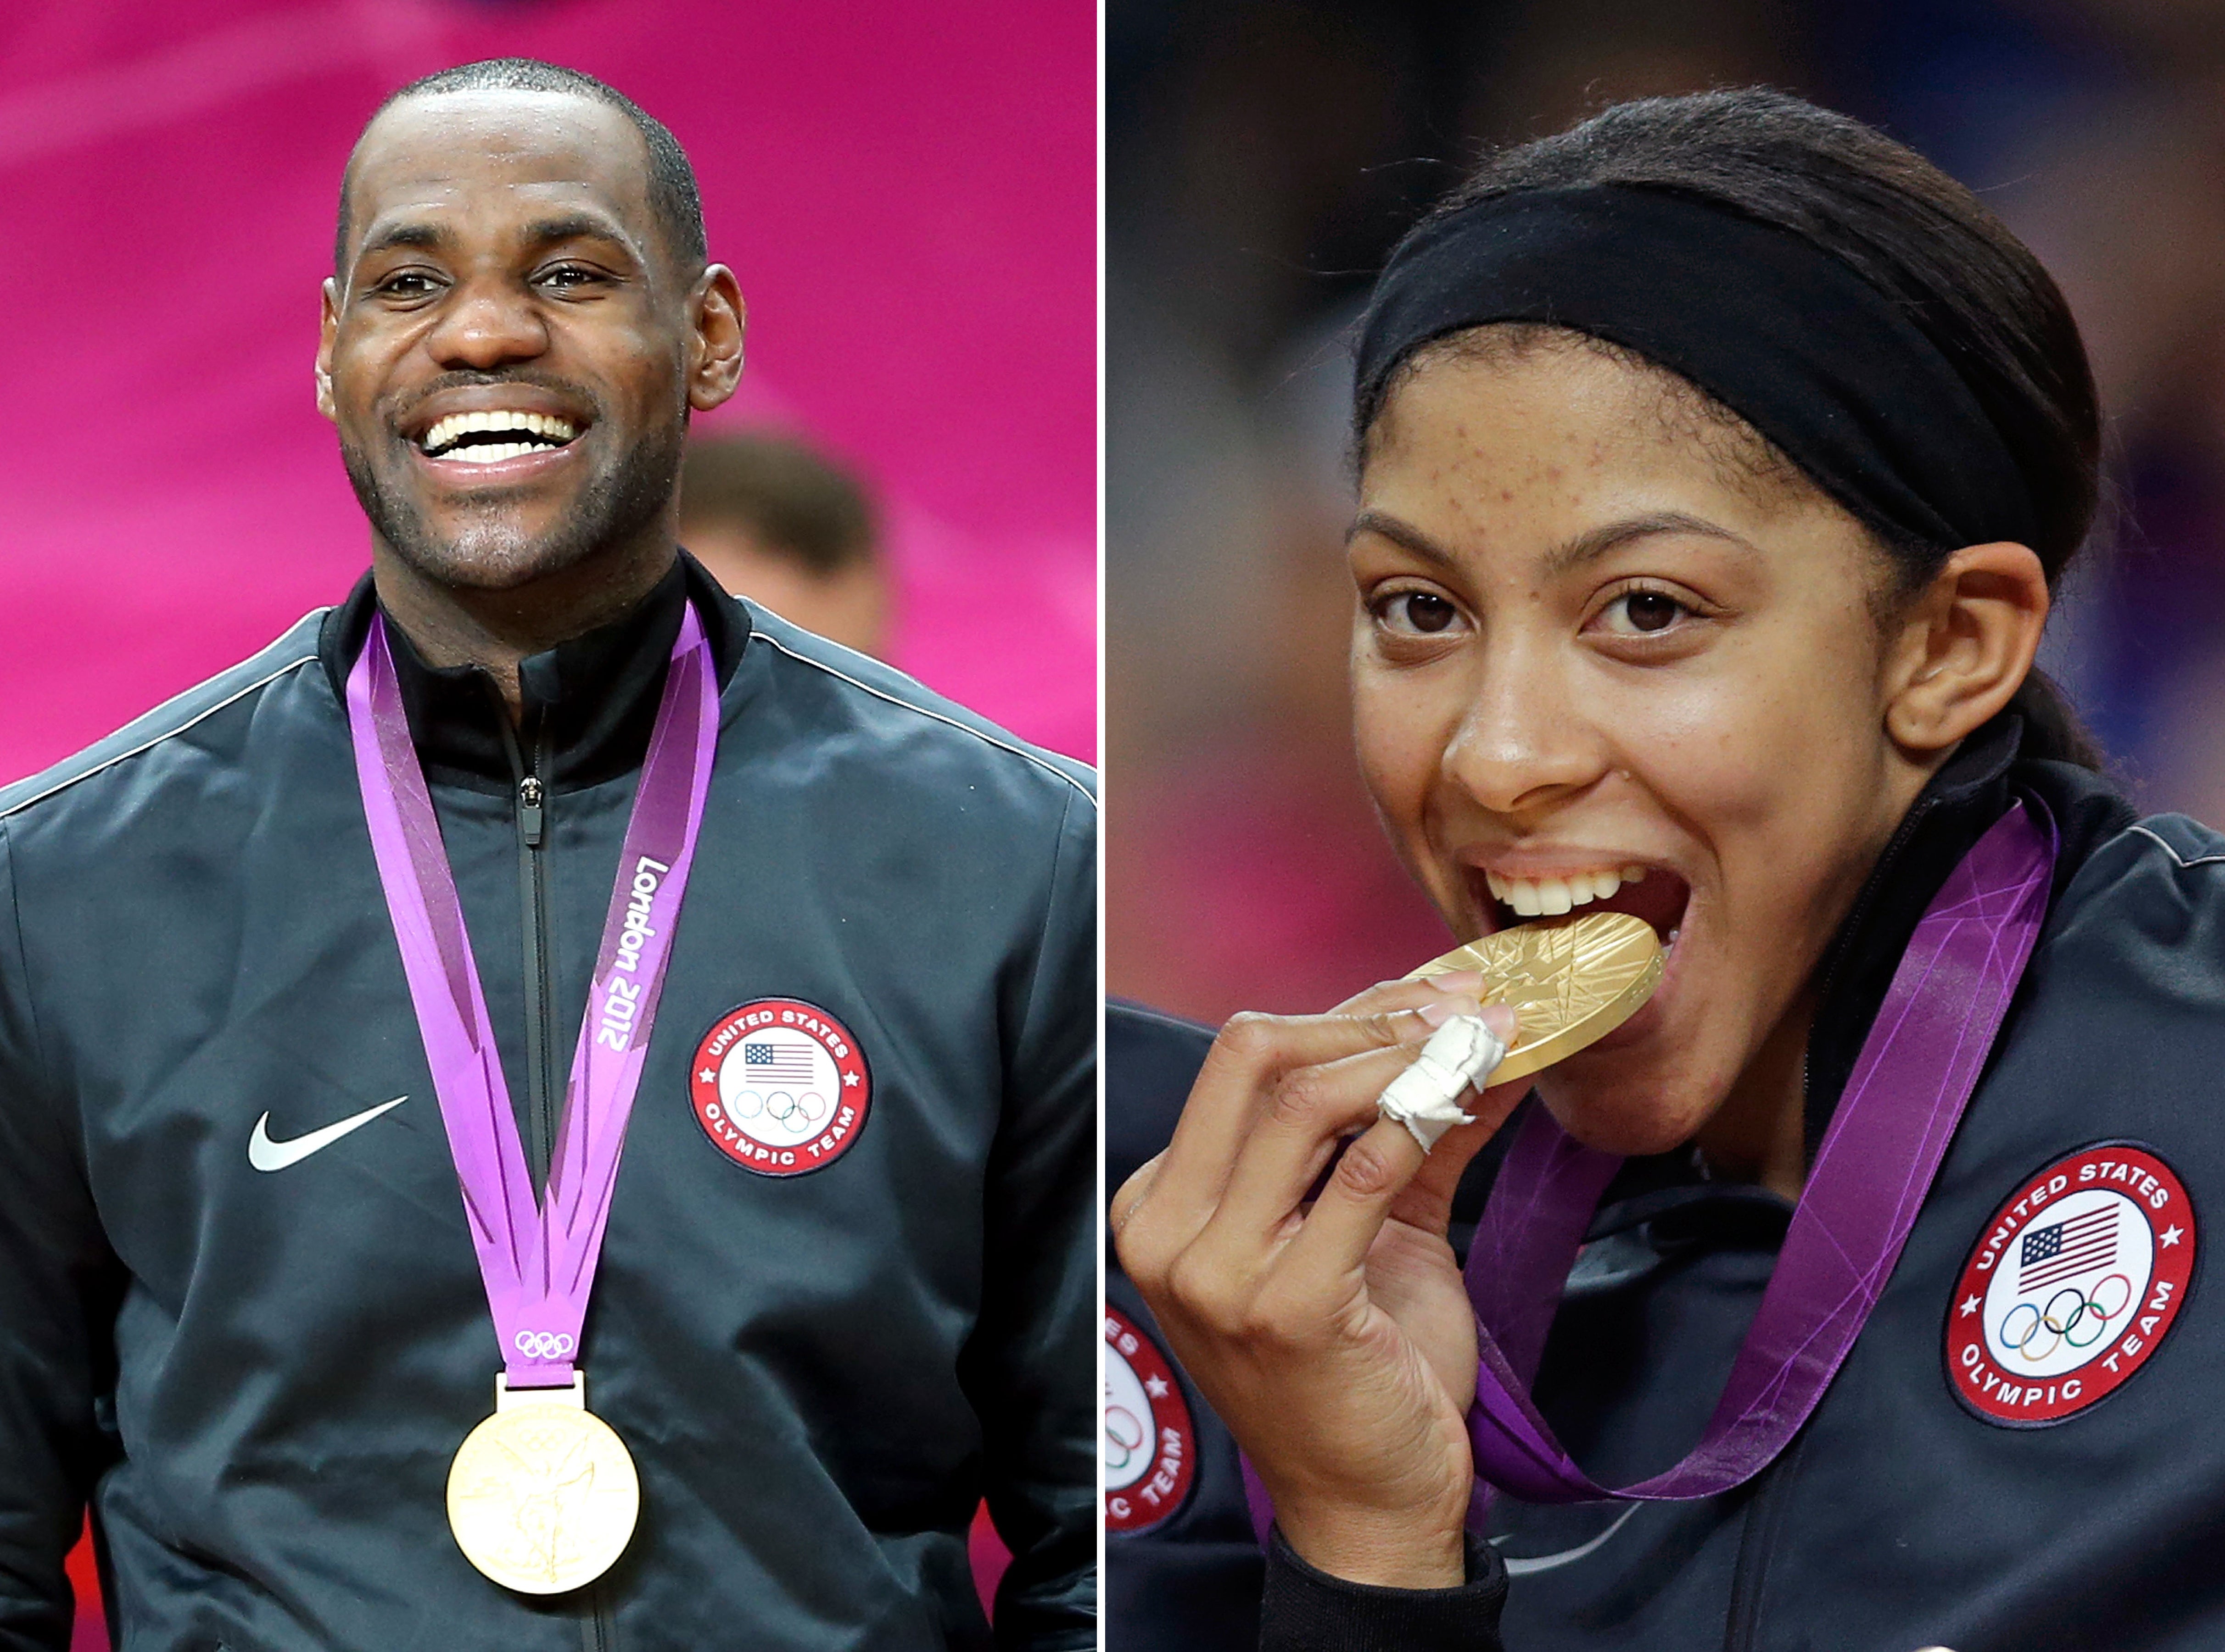 U.S. Men's and Women's Basketball Teams Score Gold